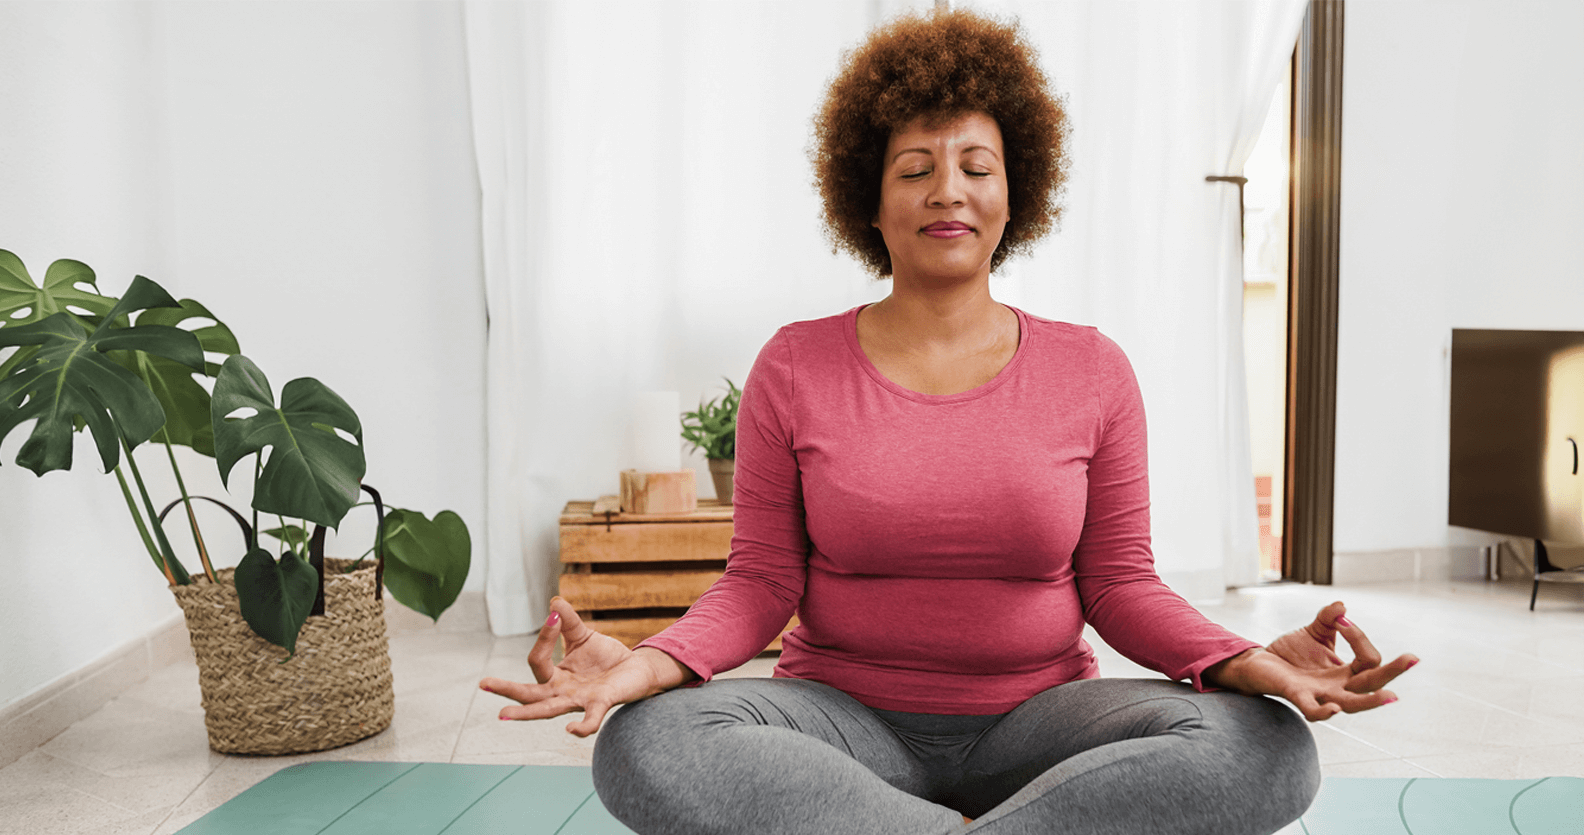 How to start meditating